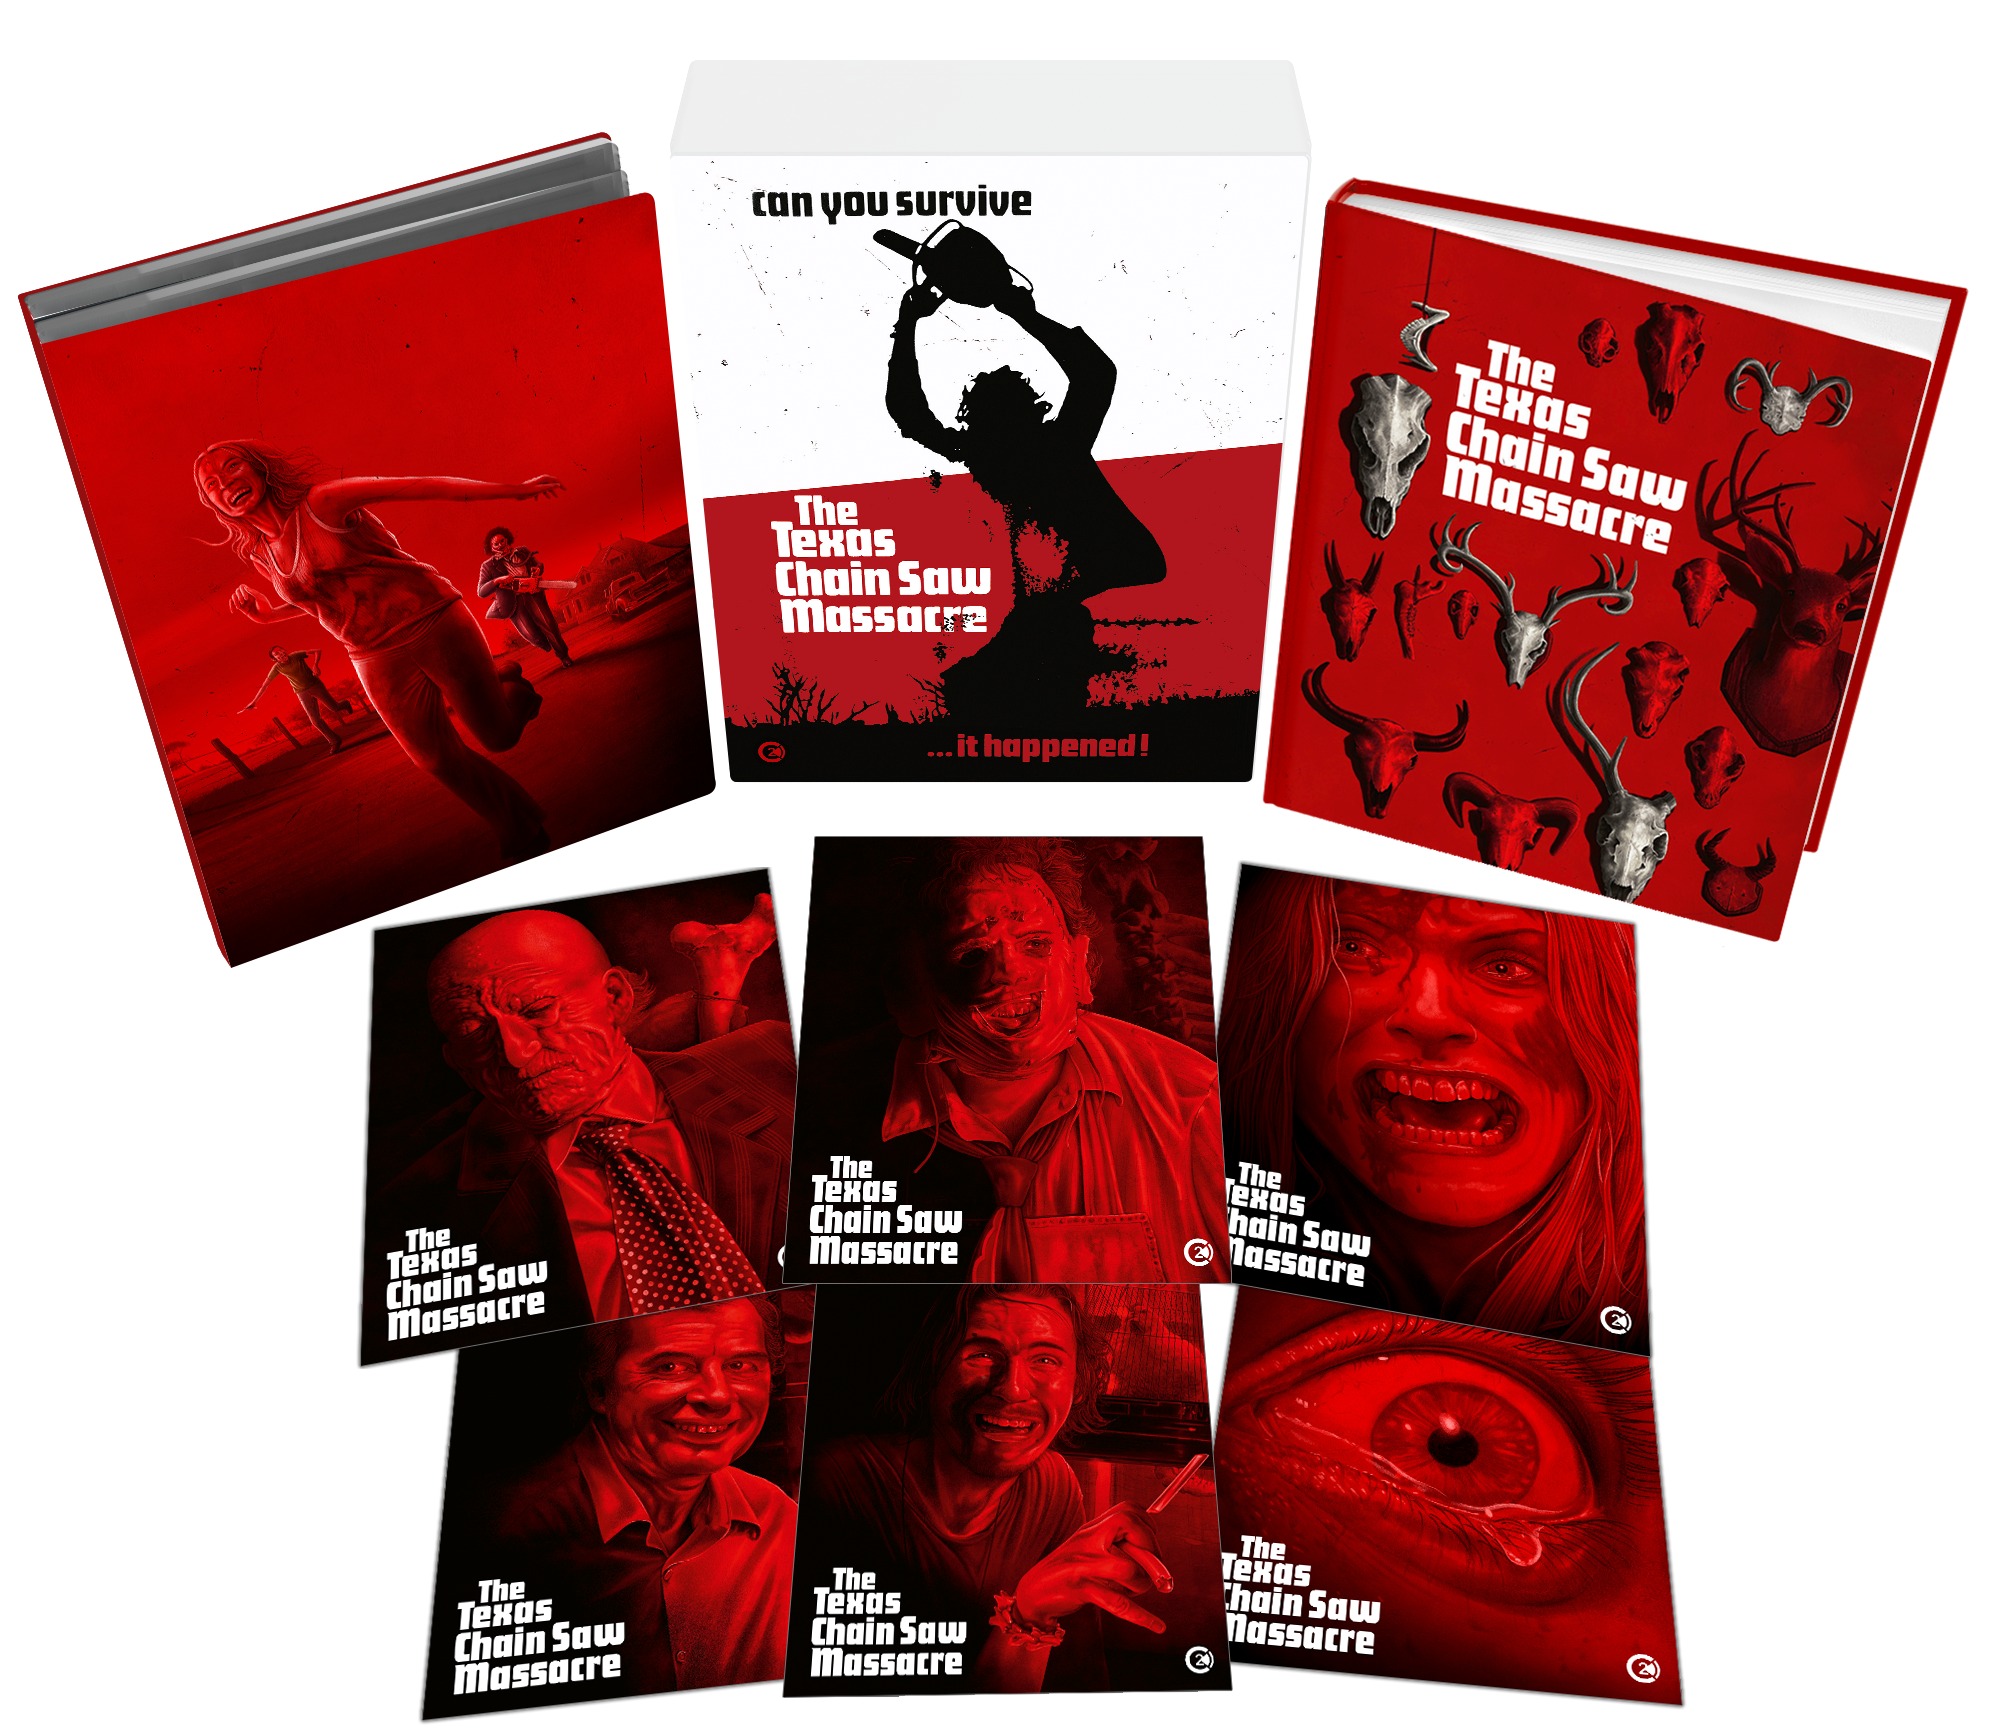 Texas Chainsaw Massacre [SteelBook] [Blu-ray] [1974] - Best Buy